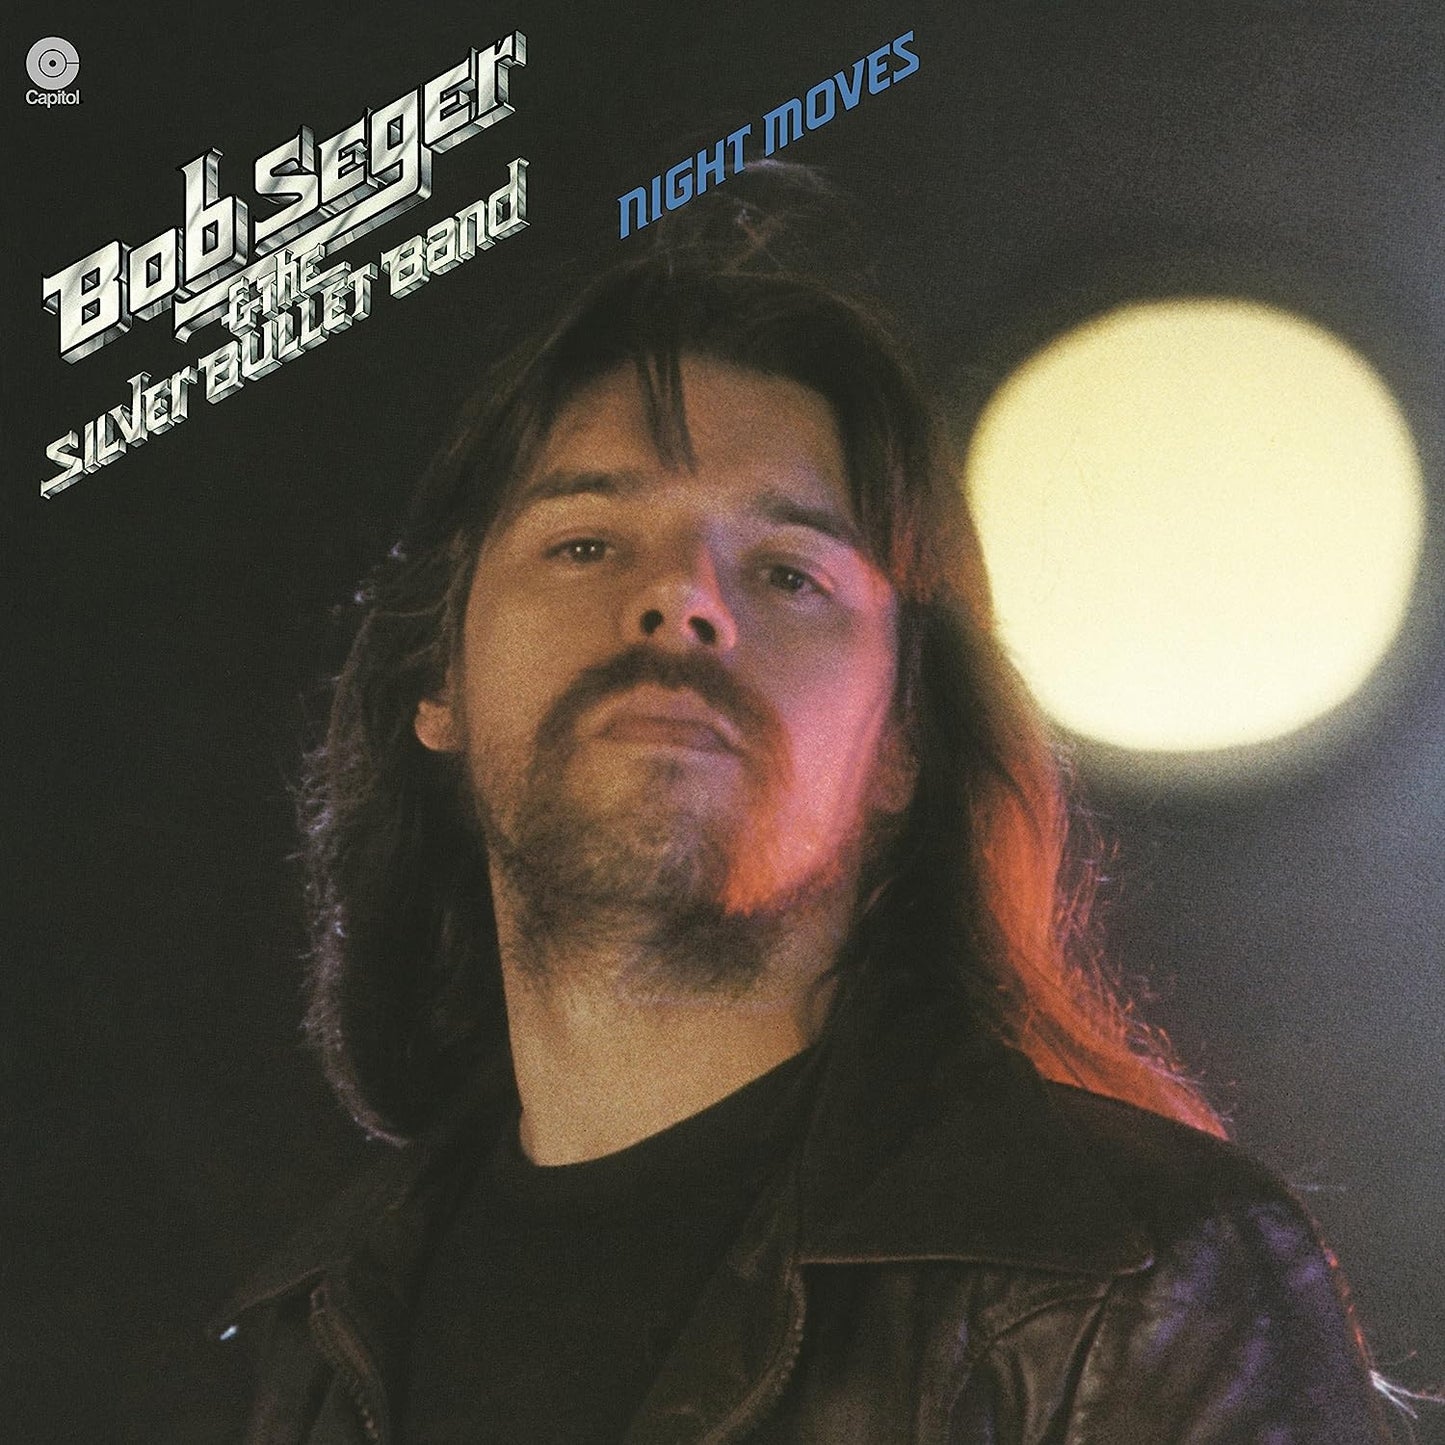 BOB SEGER & THE SILVER BULLET BAND - NIGHT MOVES - VINYL LP